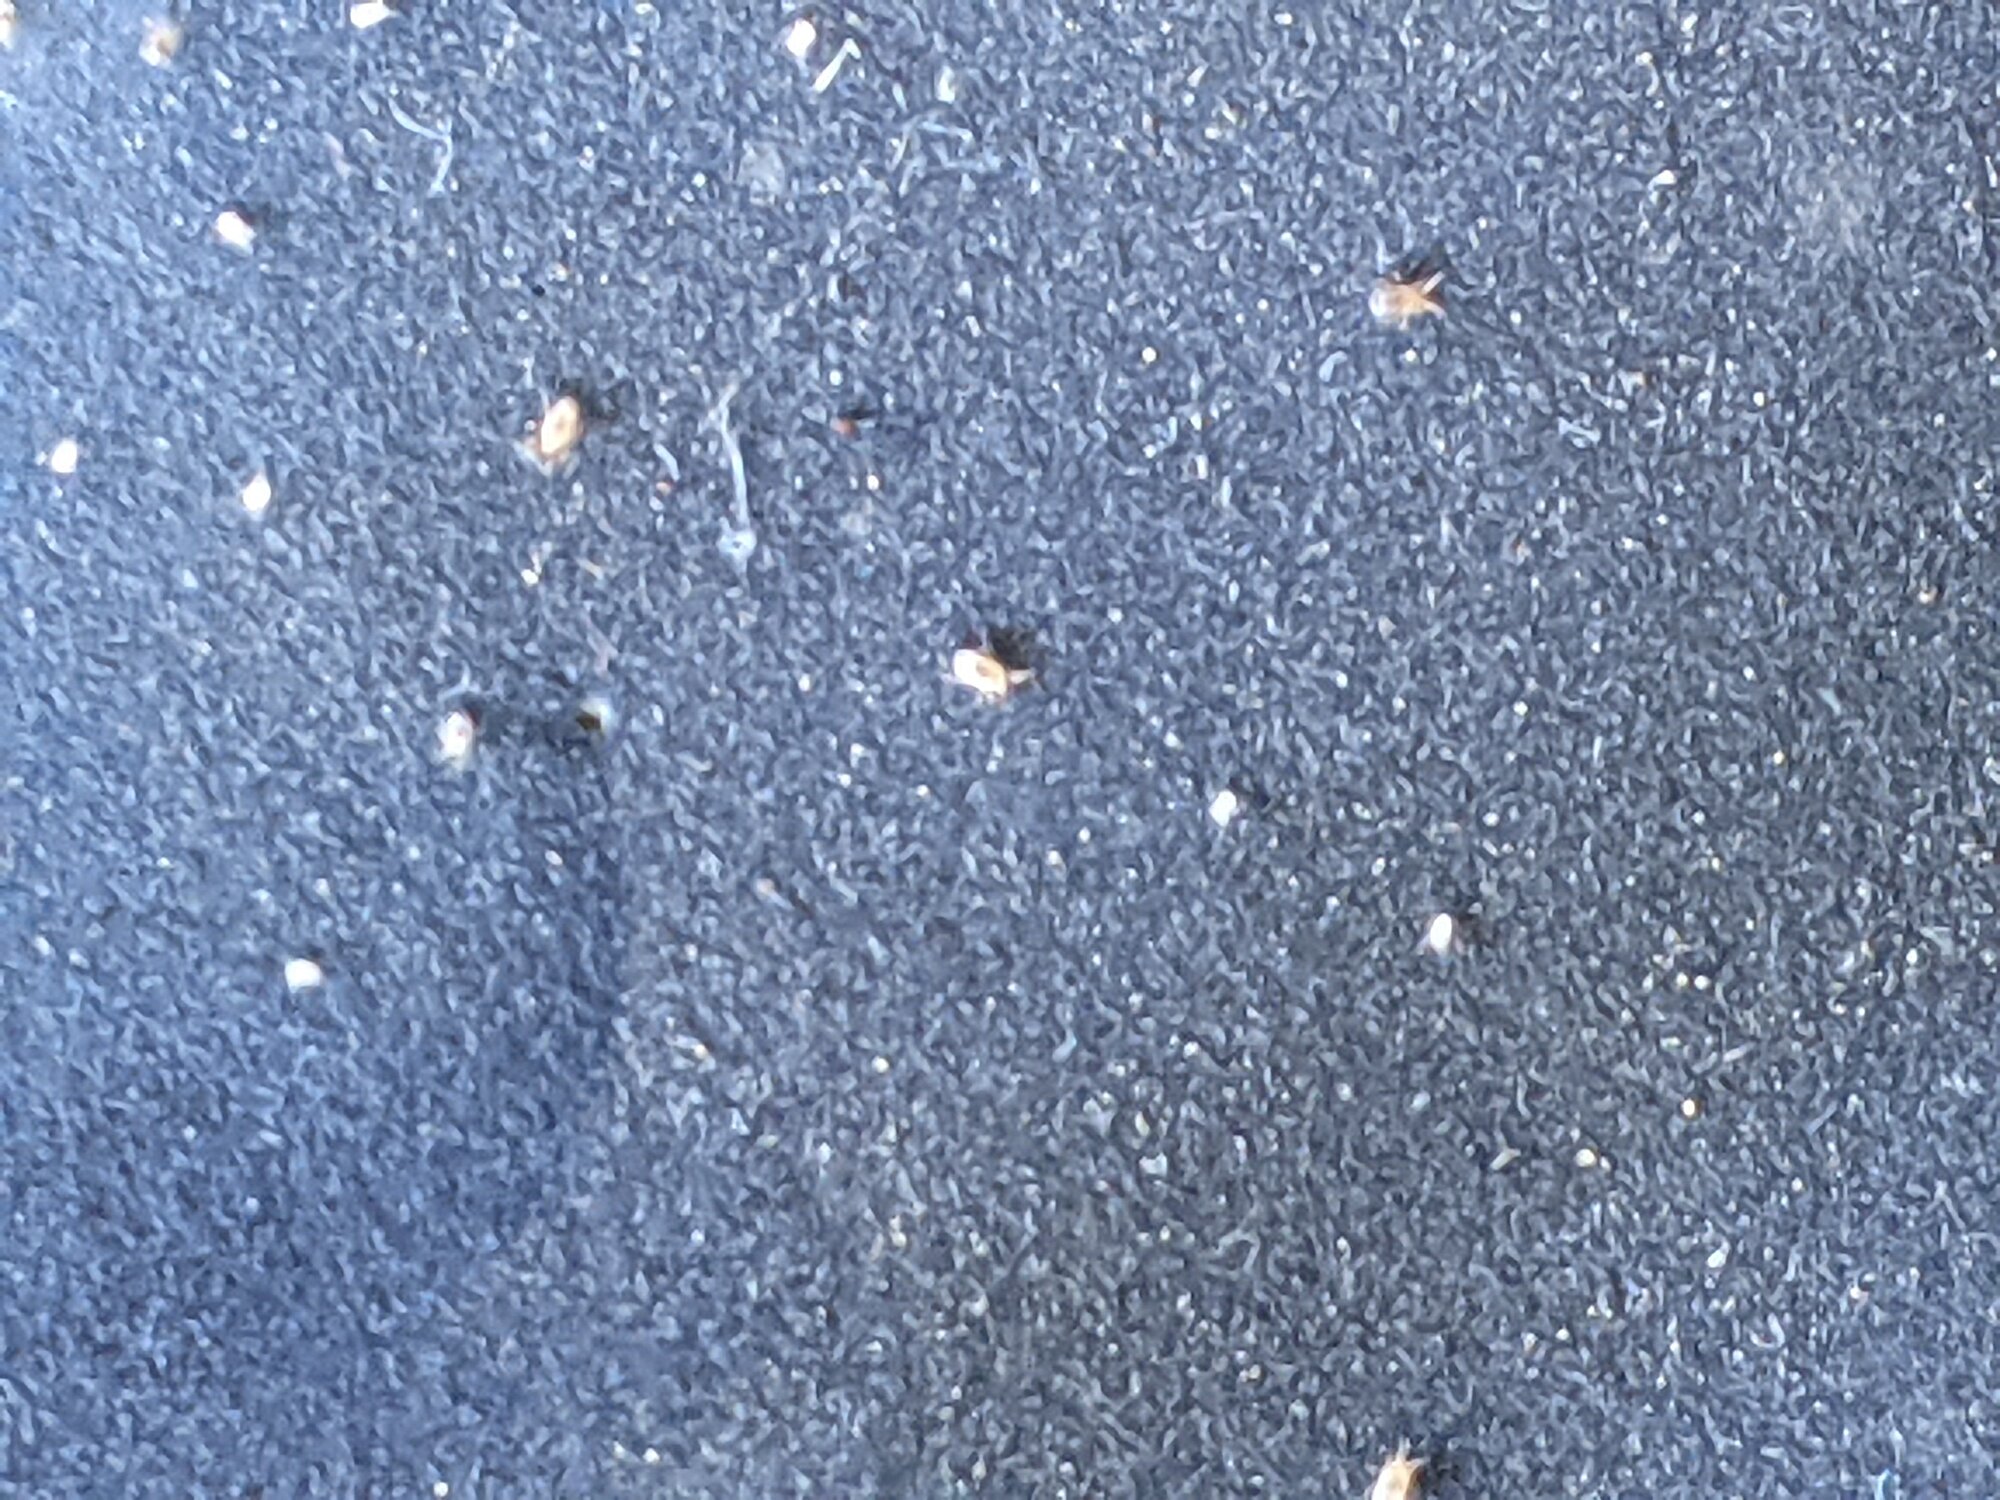 Mites on a flip flop...